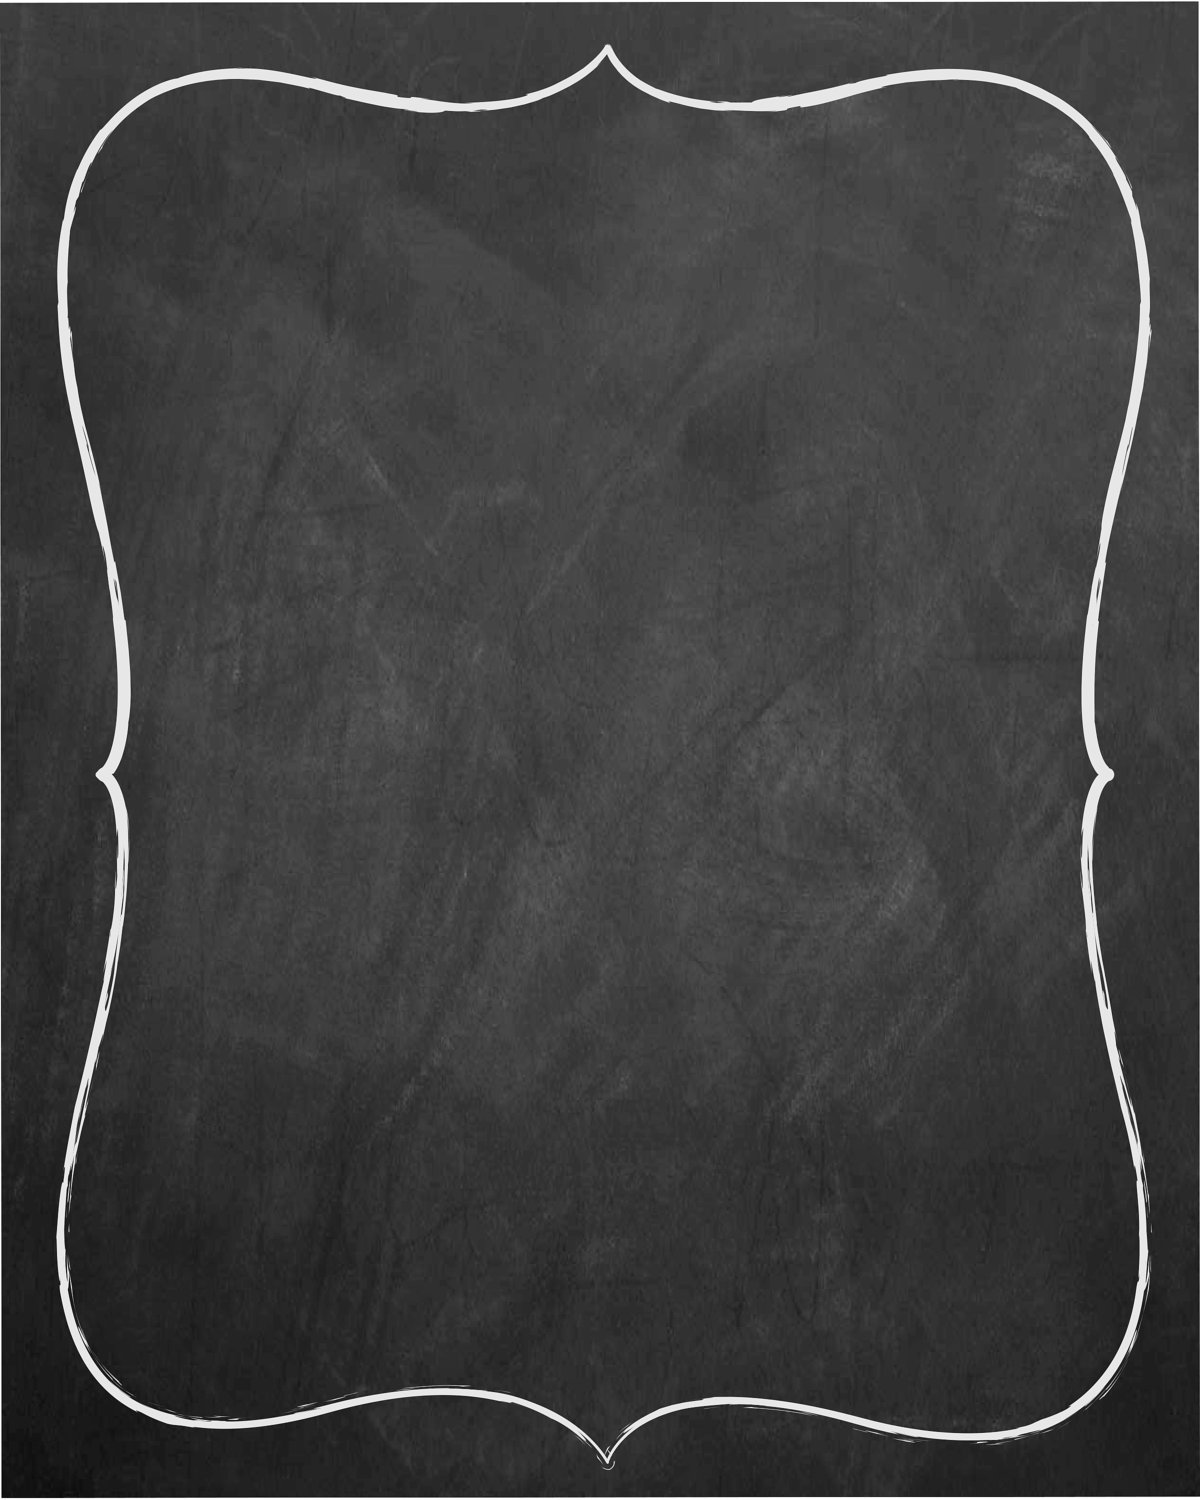 Pin Blank Chalkboard Image